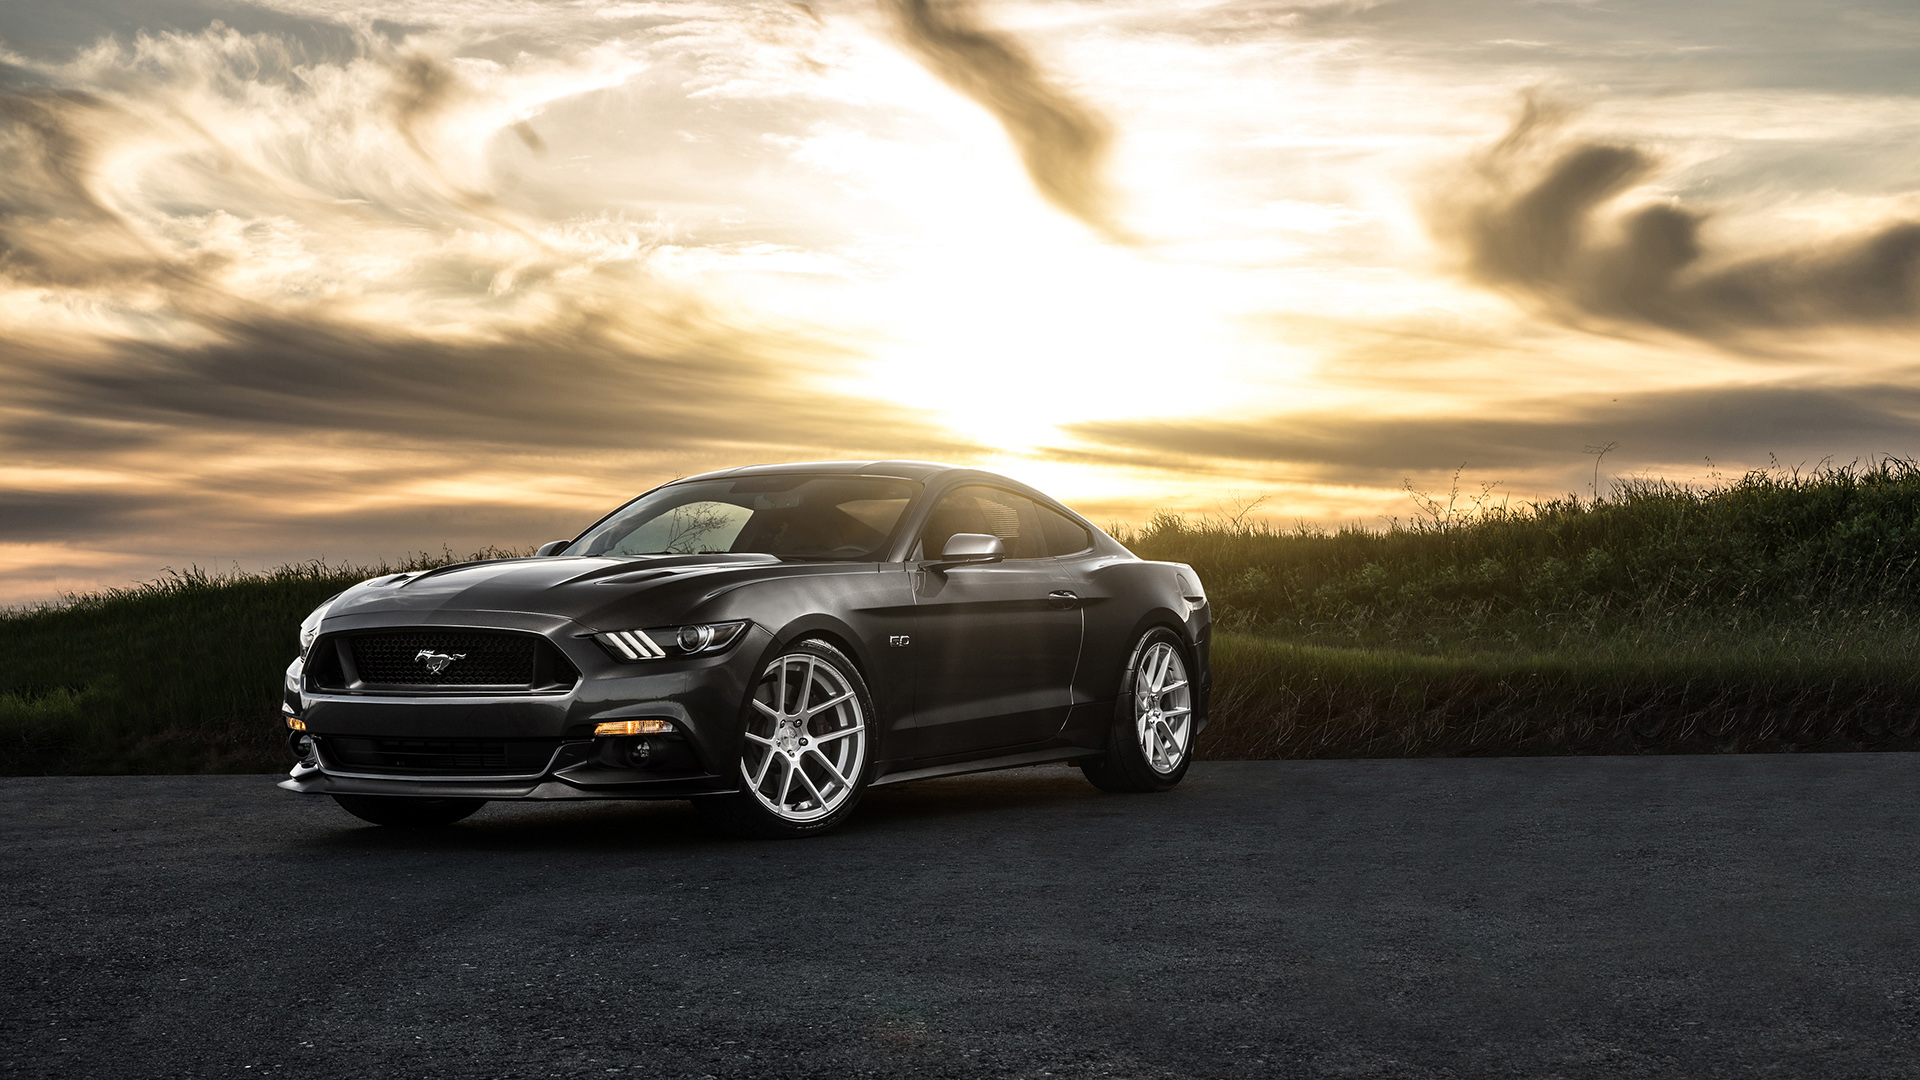 Ford Mustang 2015 Avant Garde Wallpaper | HD Car Wallpapers | ID #5460